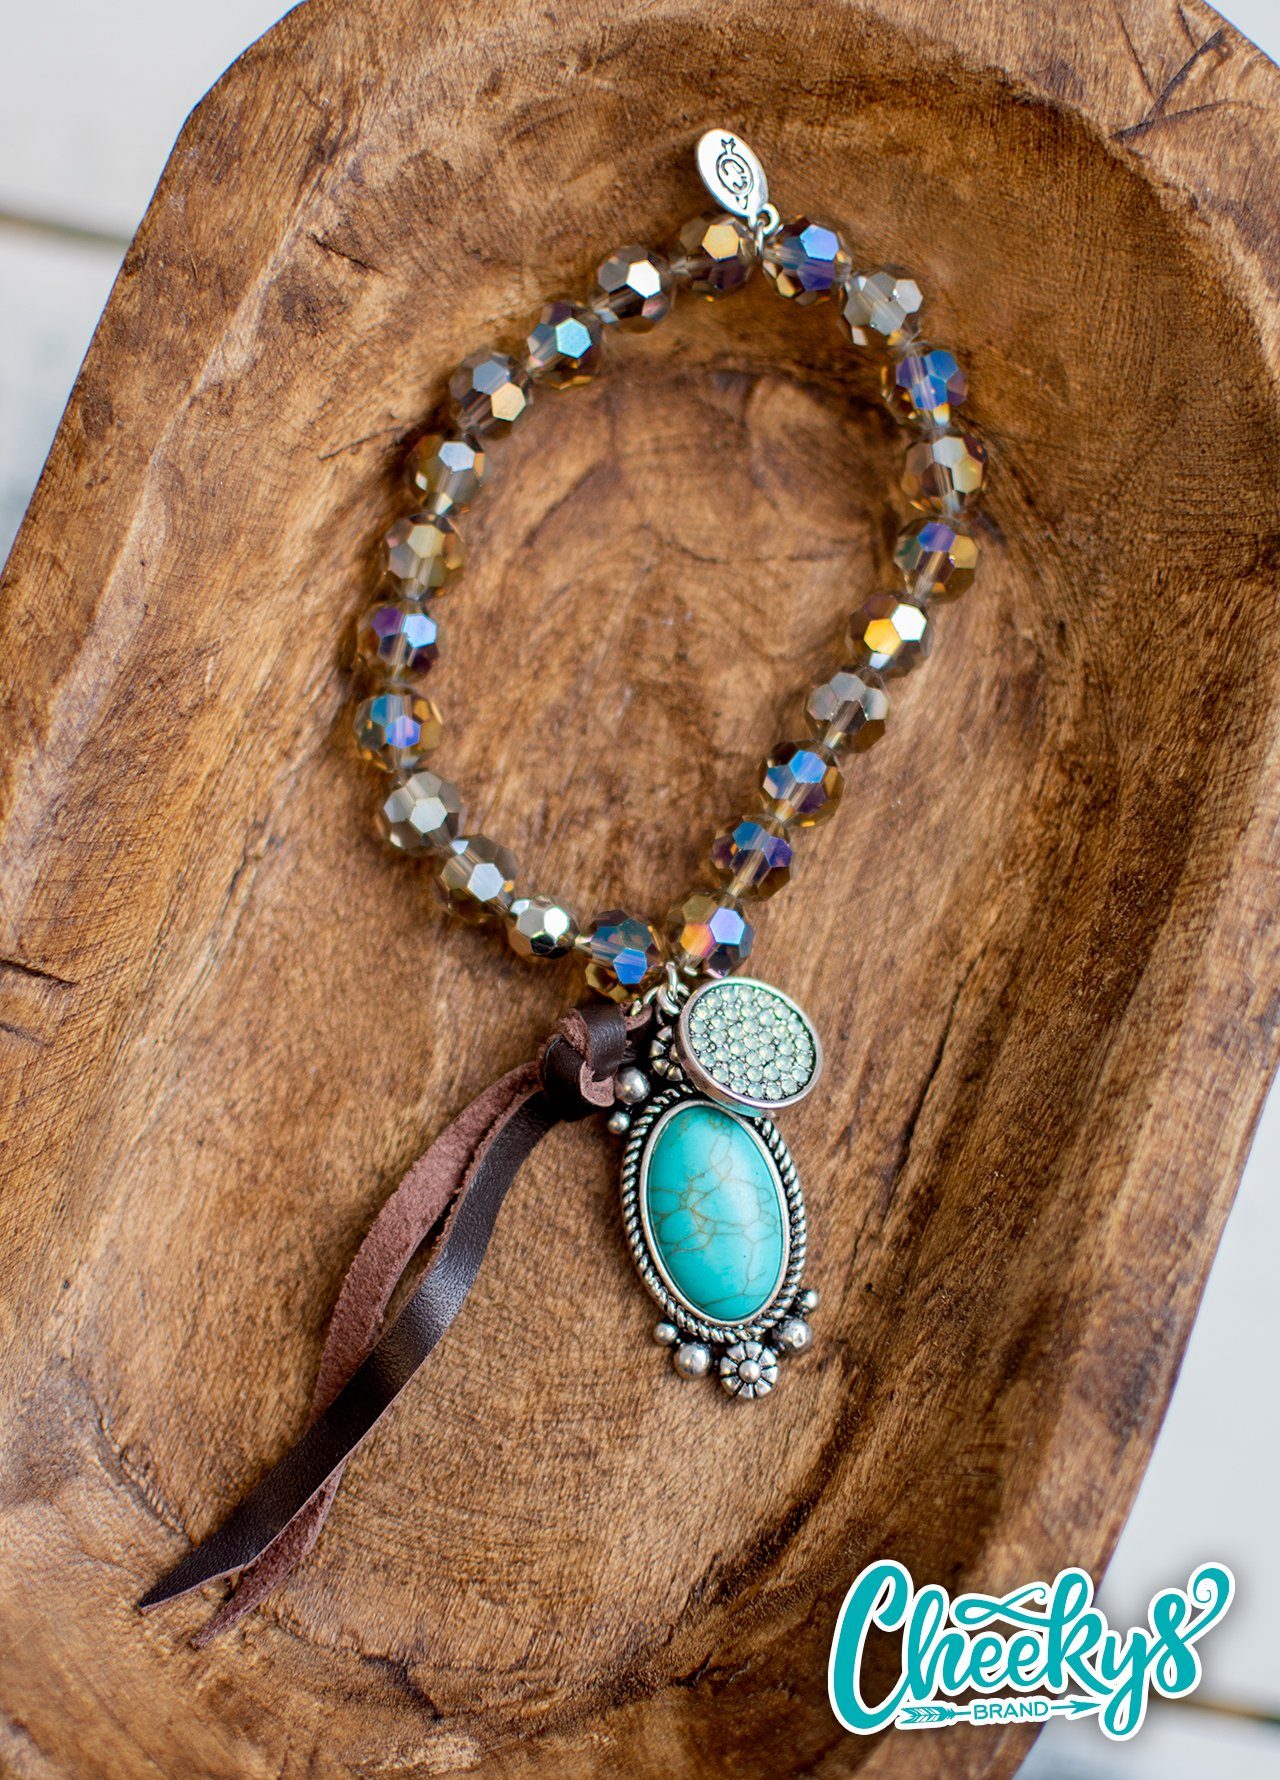 Iridescent Smokey Quartz and Turquoise Stone Concho Bracelet Jewelry 18 